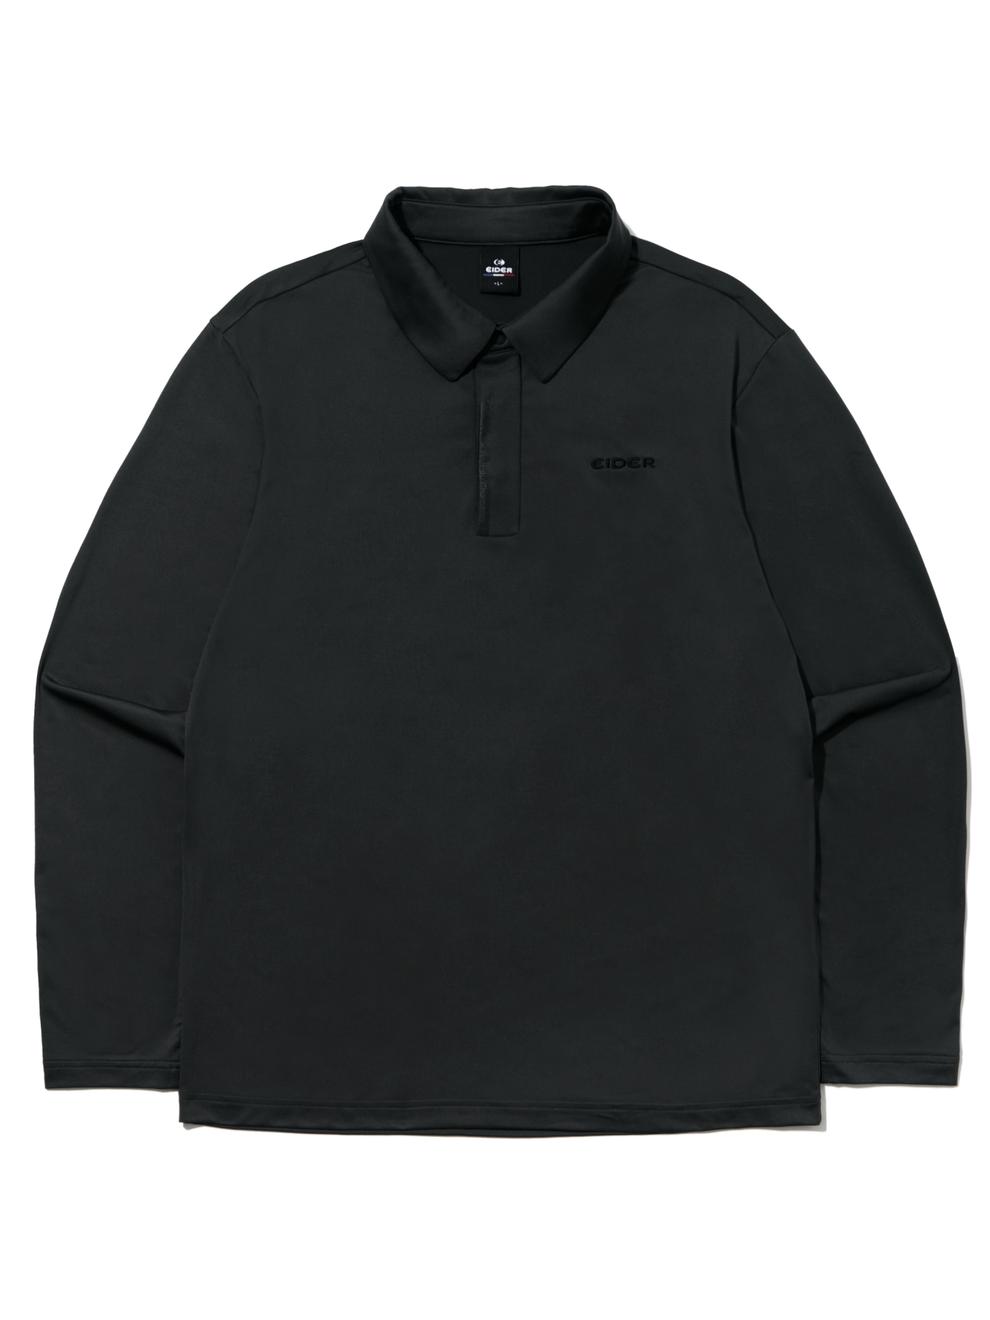 K2에서 POP 남성 브러쉬 폴로 티셔츠 (C/Grey) 69000원 제공